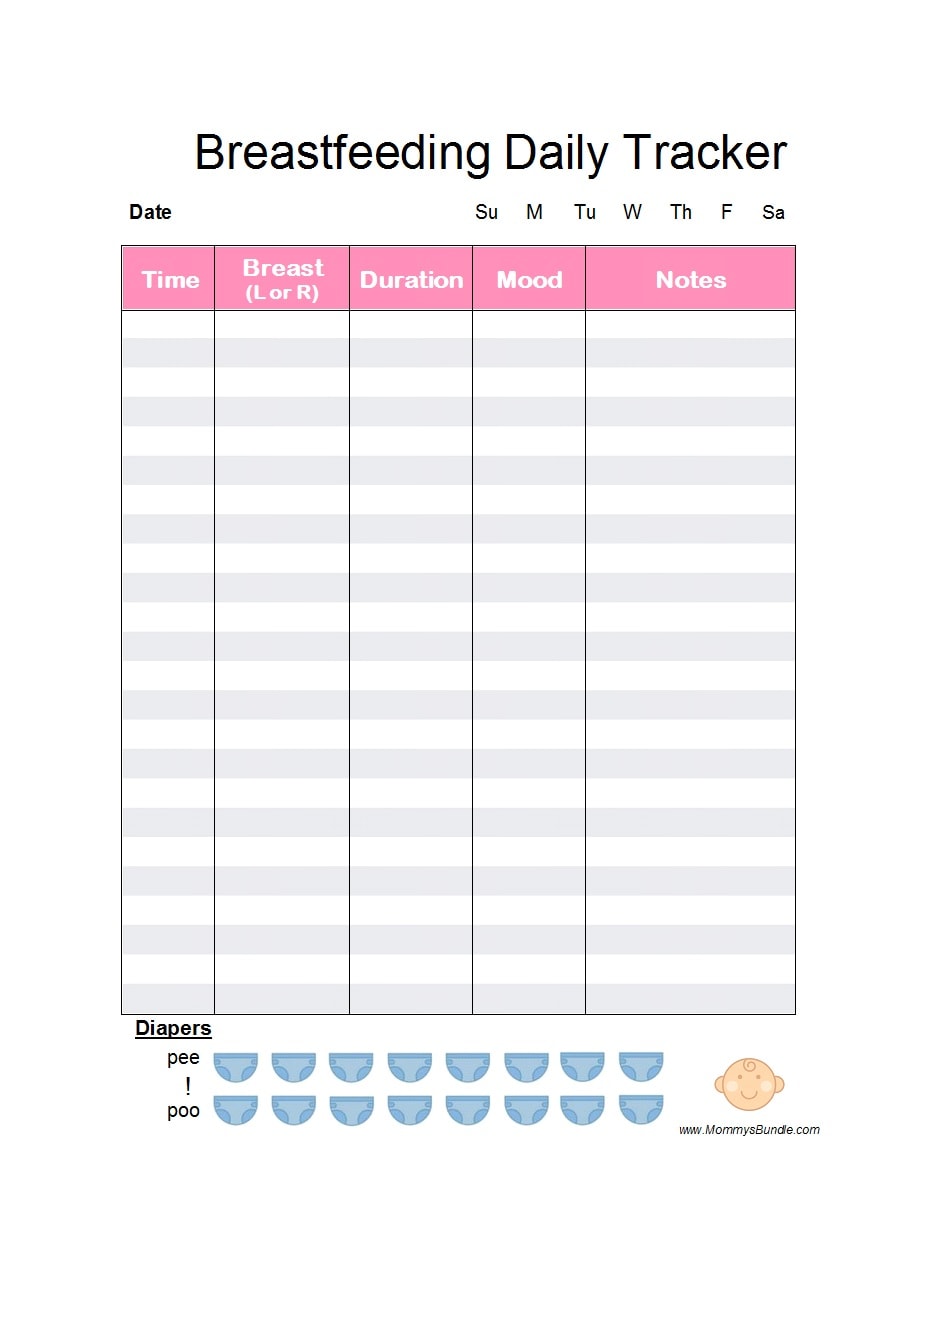 50 Printable Baby Feeding Charts Newborn Feeding Schedule